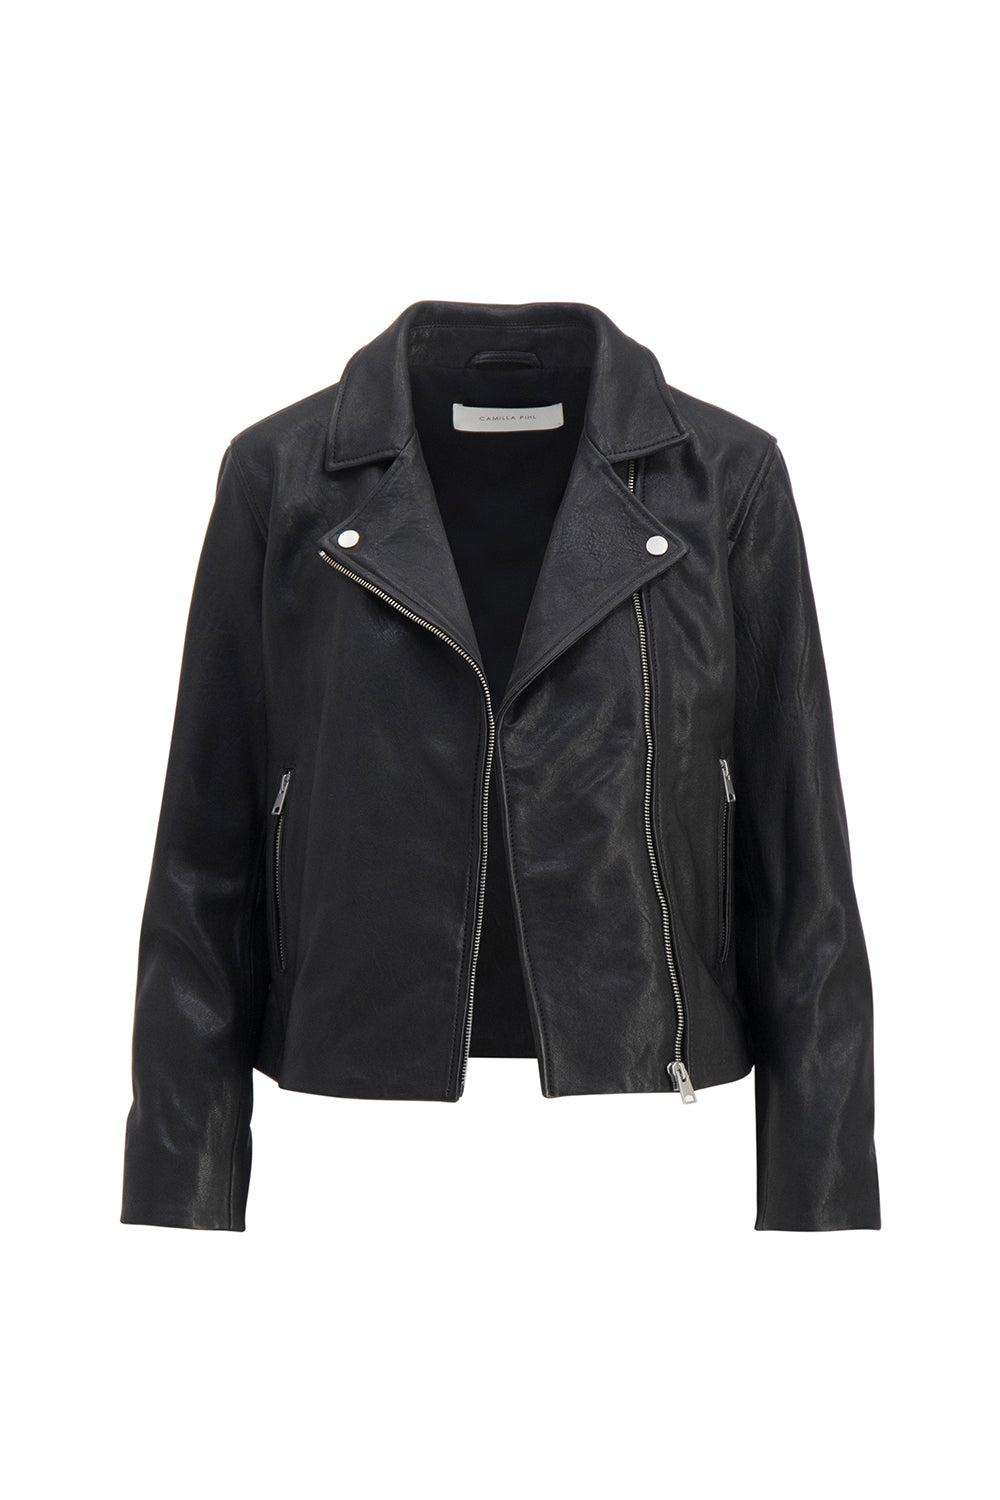 Calie Soft Leather Jacket